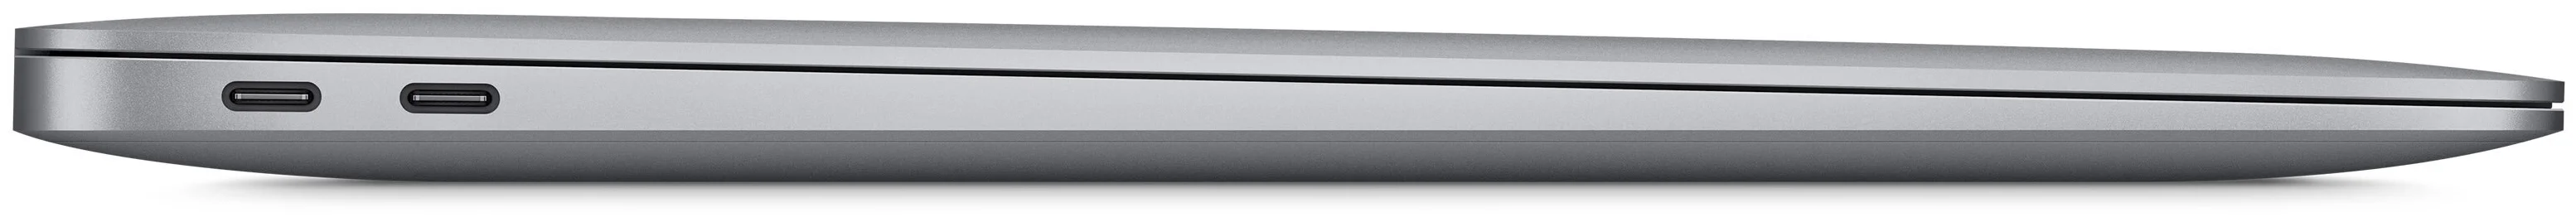 13.3" Apple MacBook Air 13 Early 2020 - фунционал USB Type-C: Power Delivery, Thunderbolt 3, DisplayPort 1.4